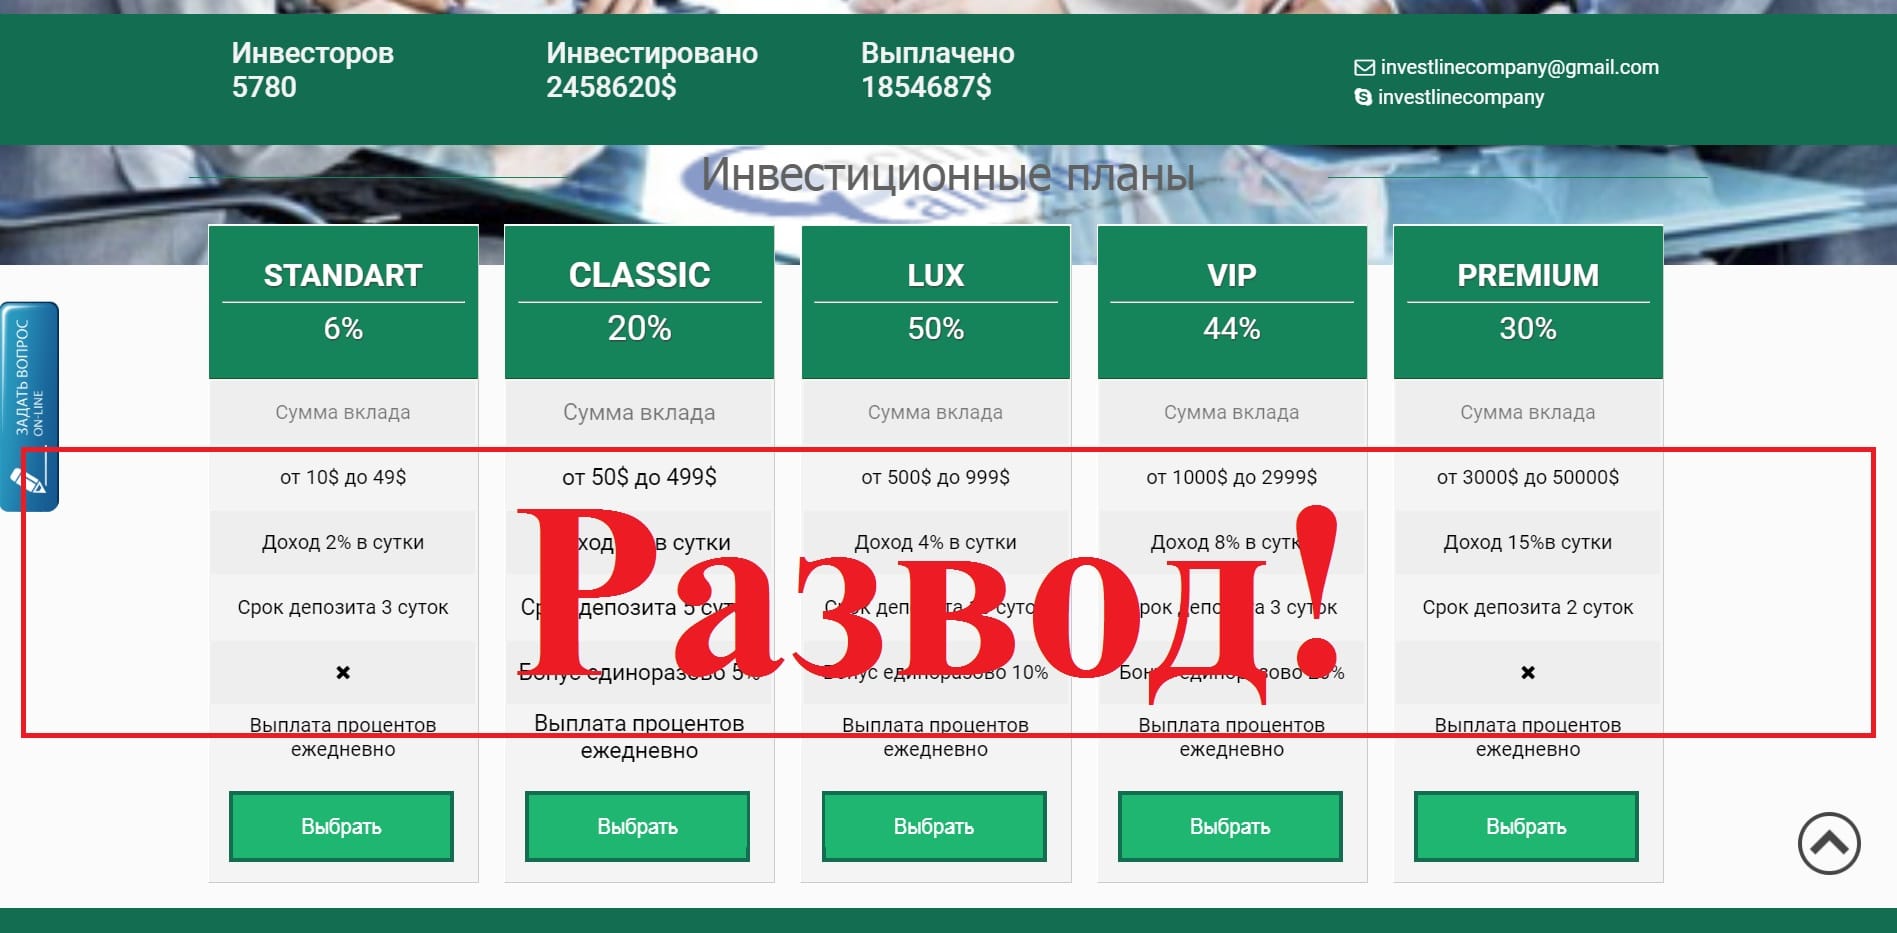 Invest Line Company – реальные отзывы о investlinecompany.ru